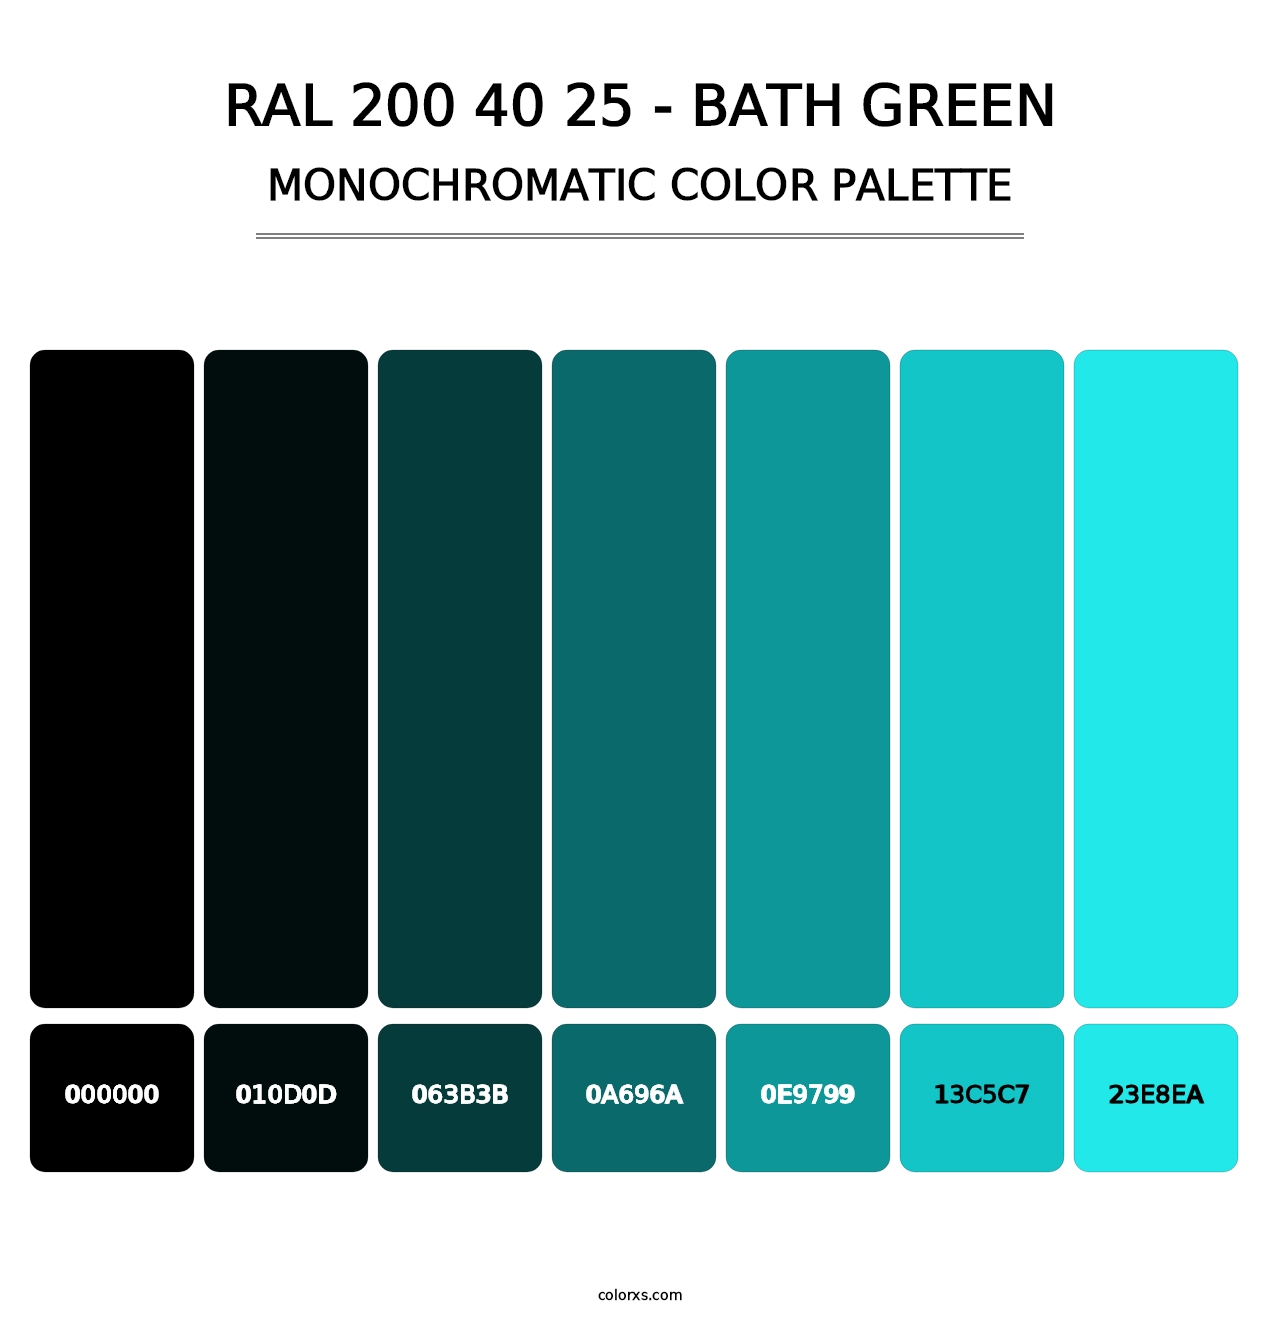 RAL 200 40 25 - Bath Green - Monochromatic Color Palette